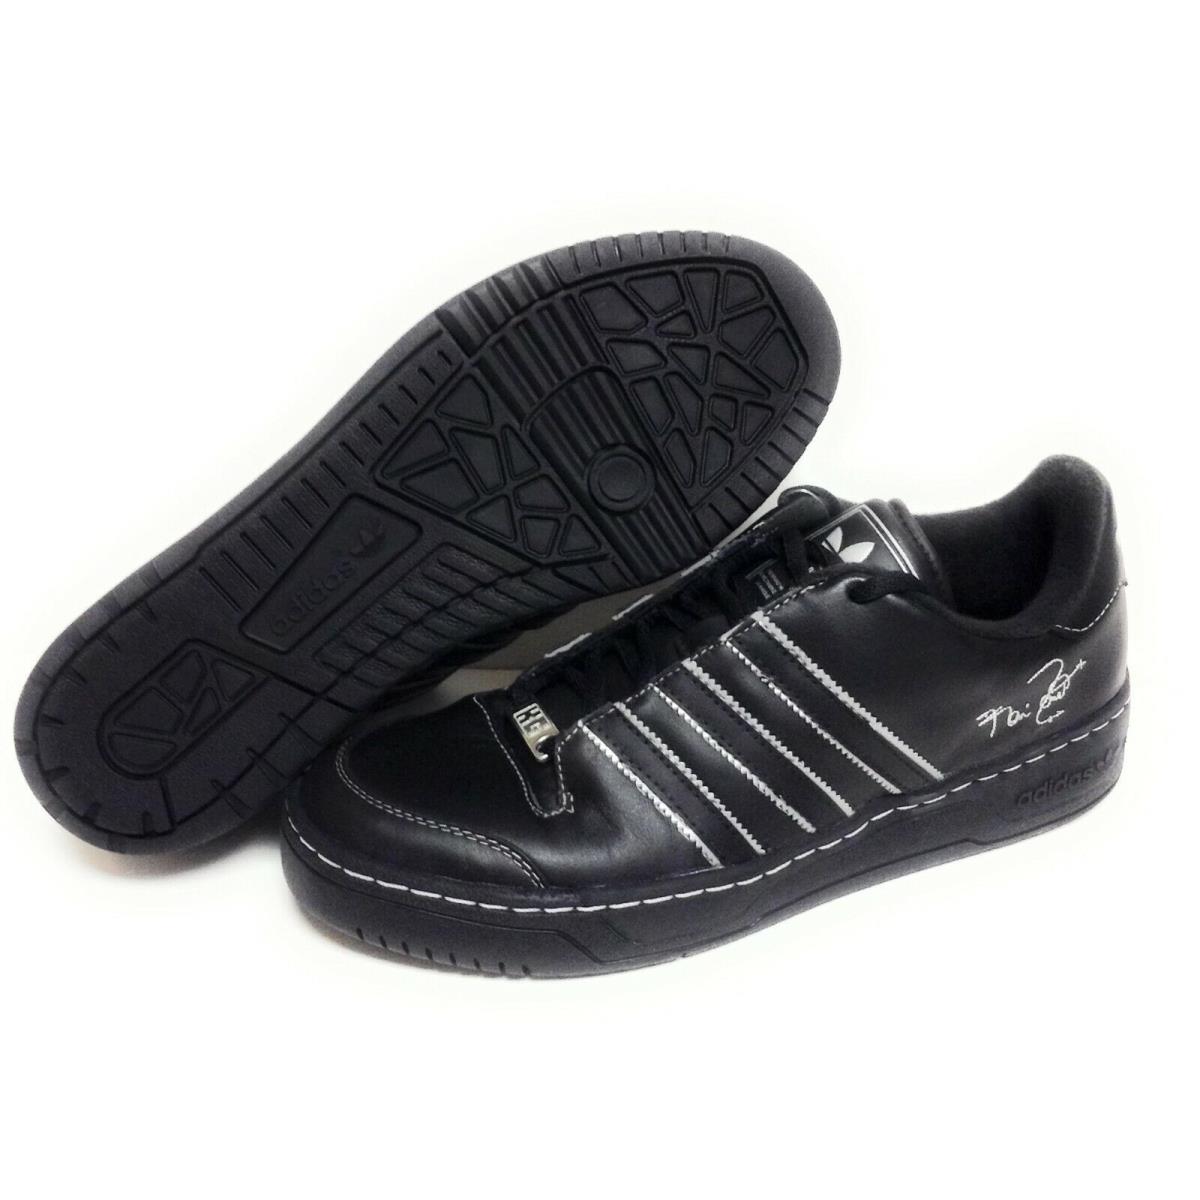 Mens Adidas KG Attitude Double Lo 551362 2004 Deadstock Black Sneakers Shoes - Black, Manufacturer: Black